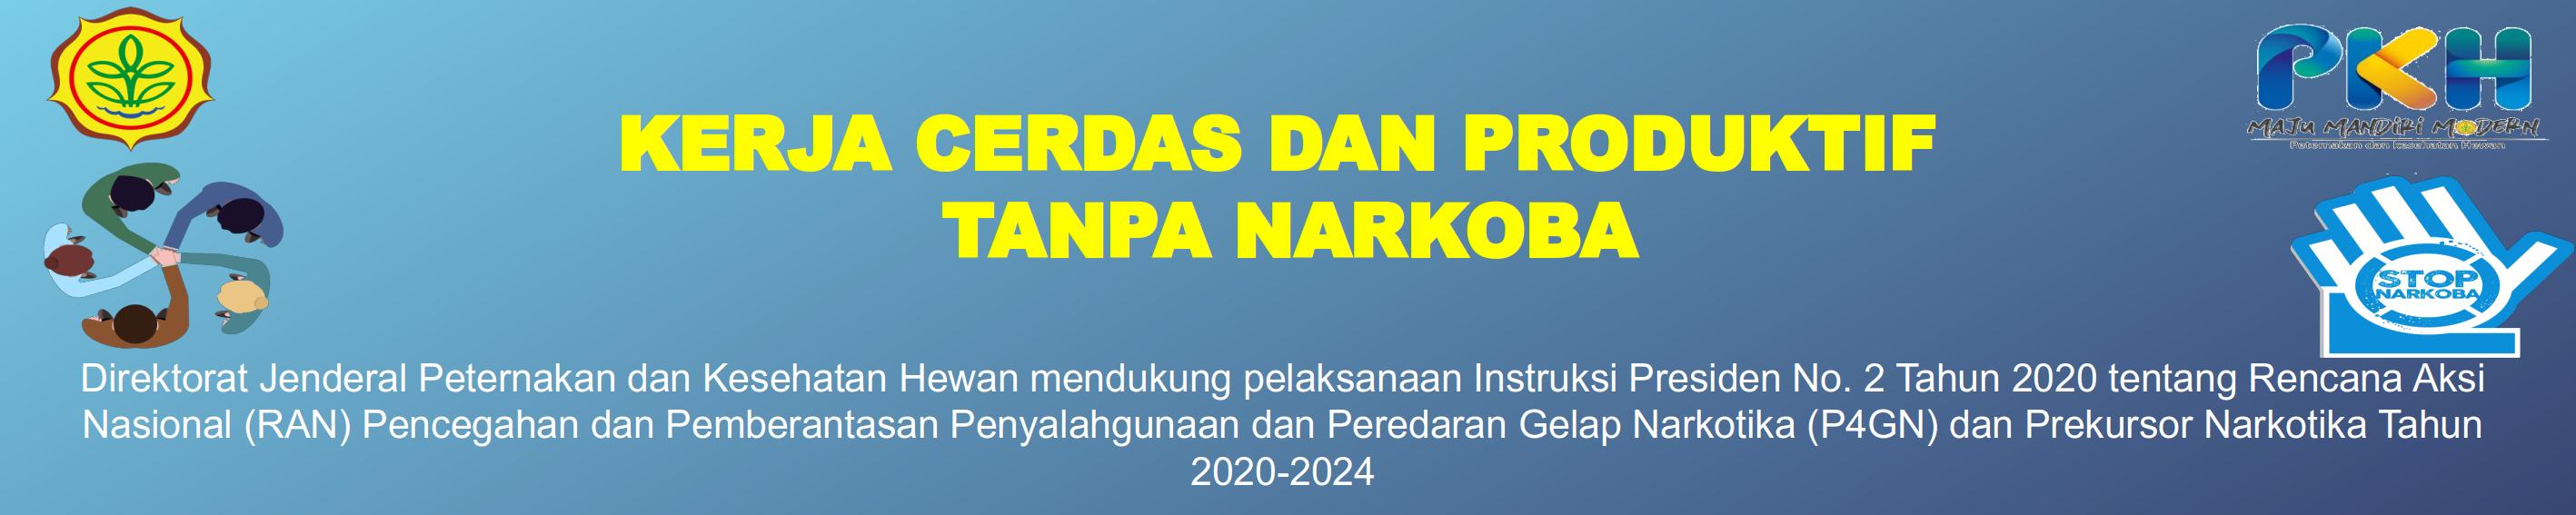 Kerja Cerdas dan Produktif Tanpa Narkoba - P4GN 2020-2024